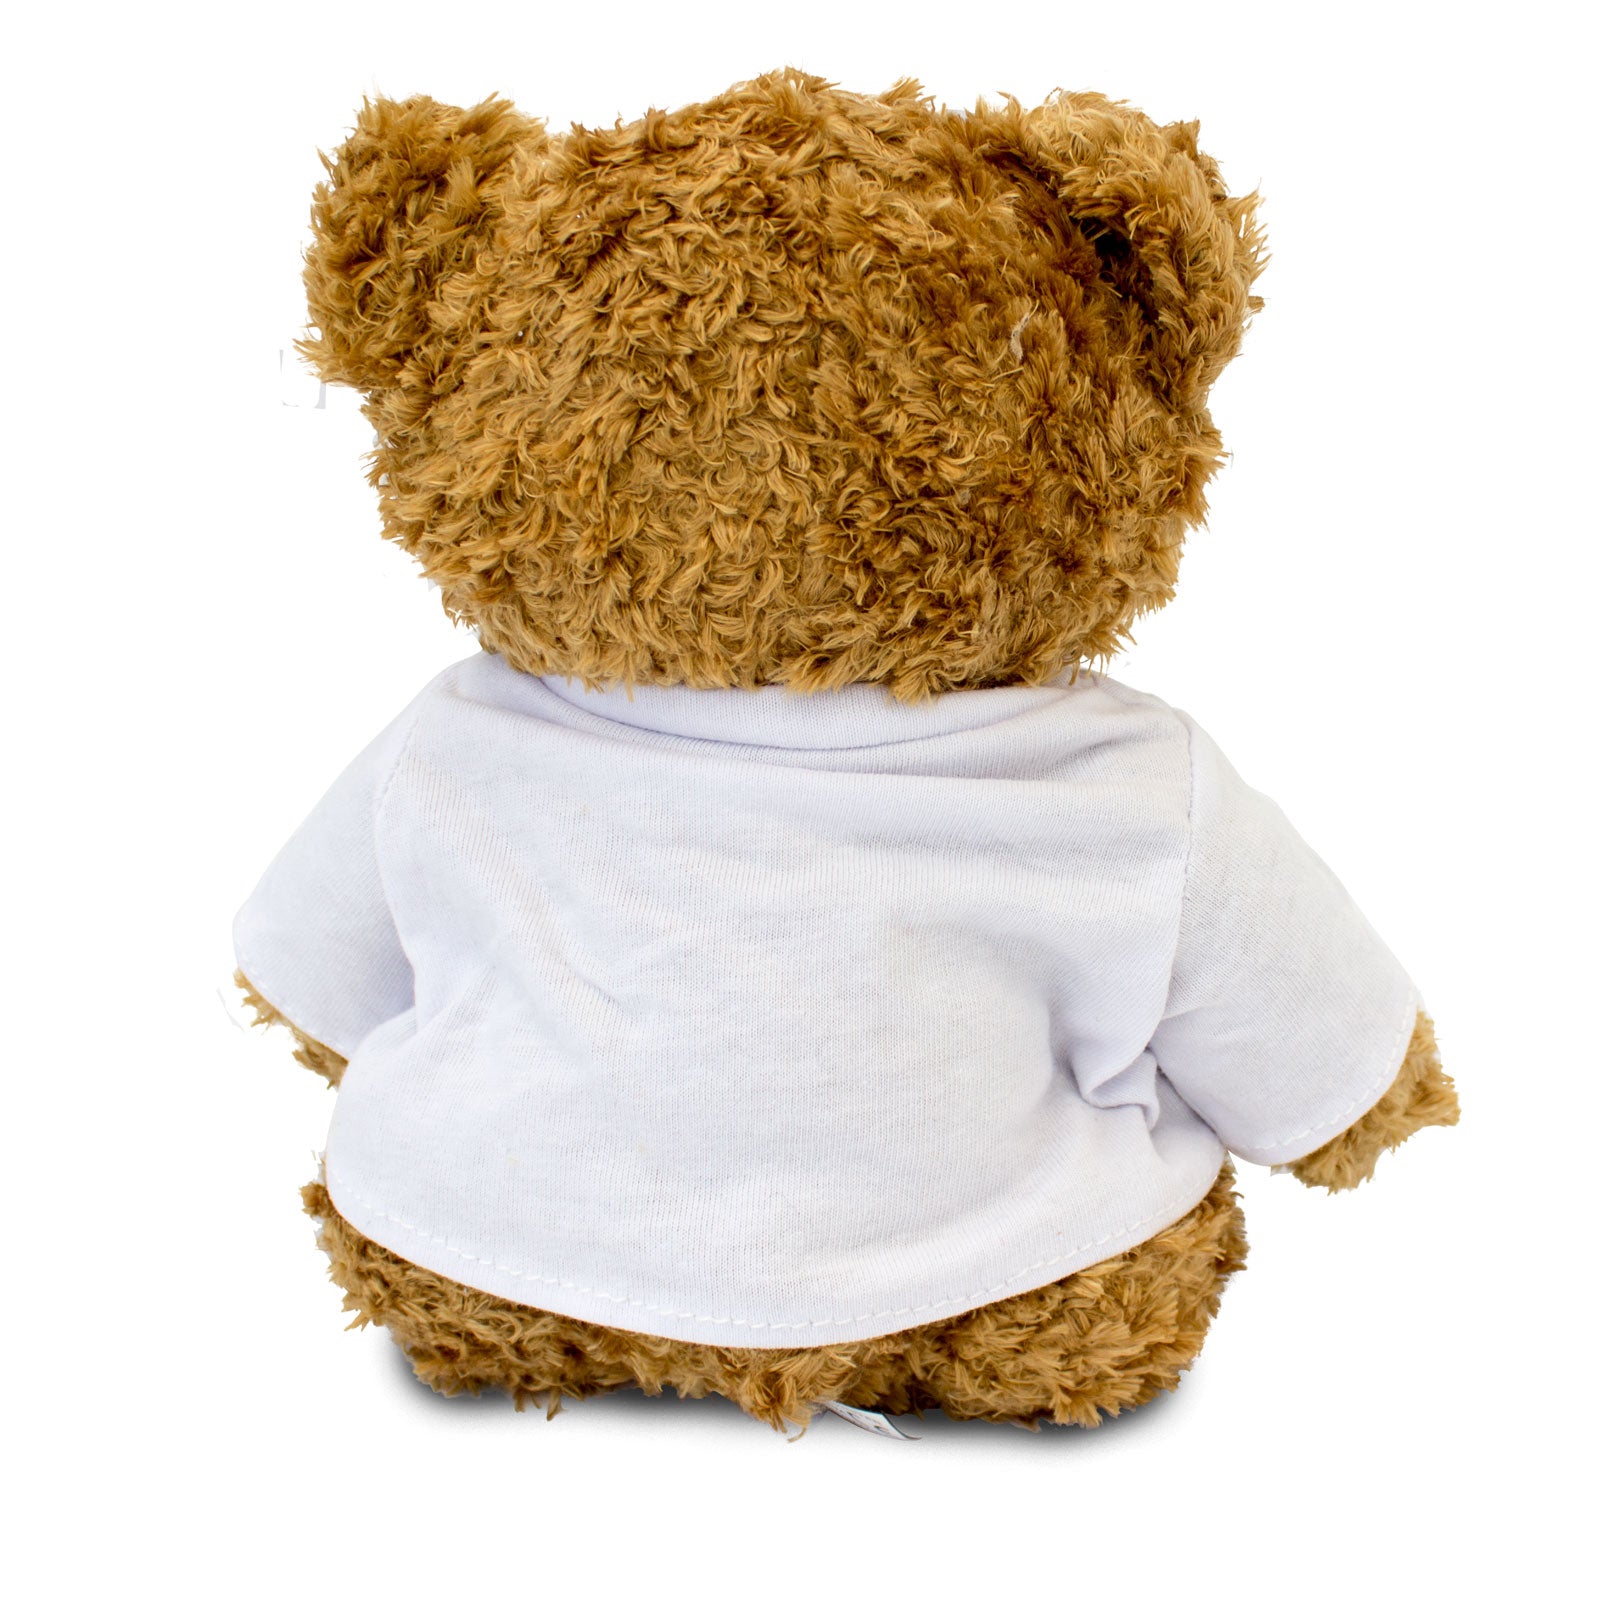 Get Well Soon Babette - Teddy Bear